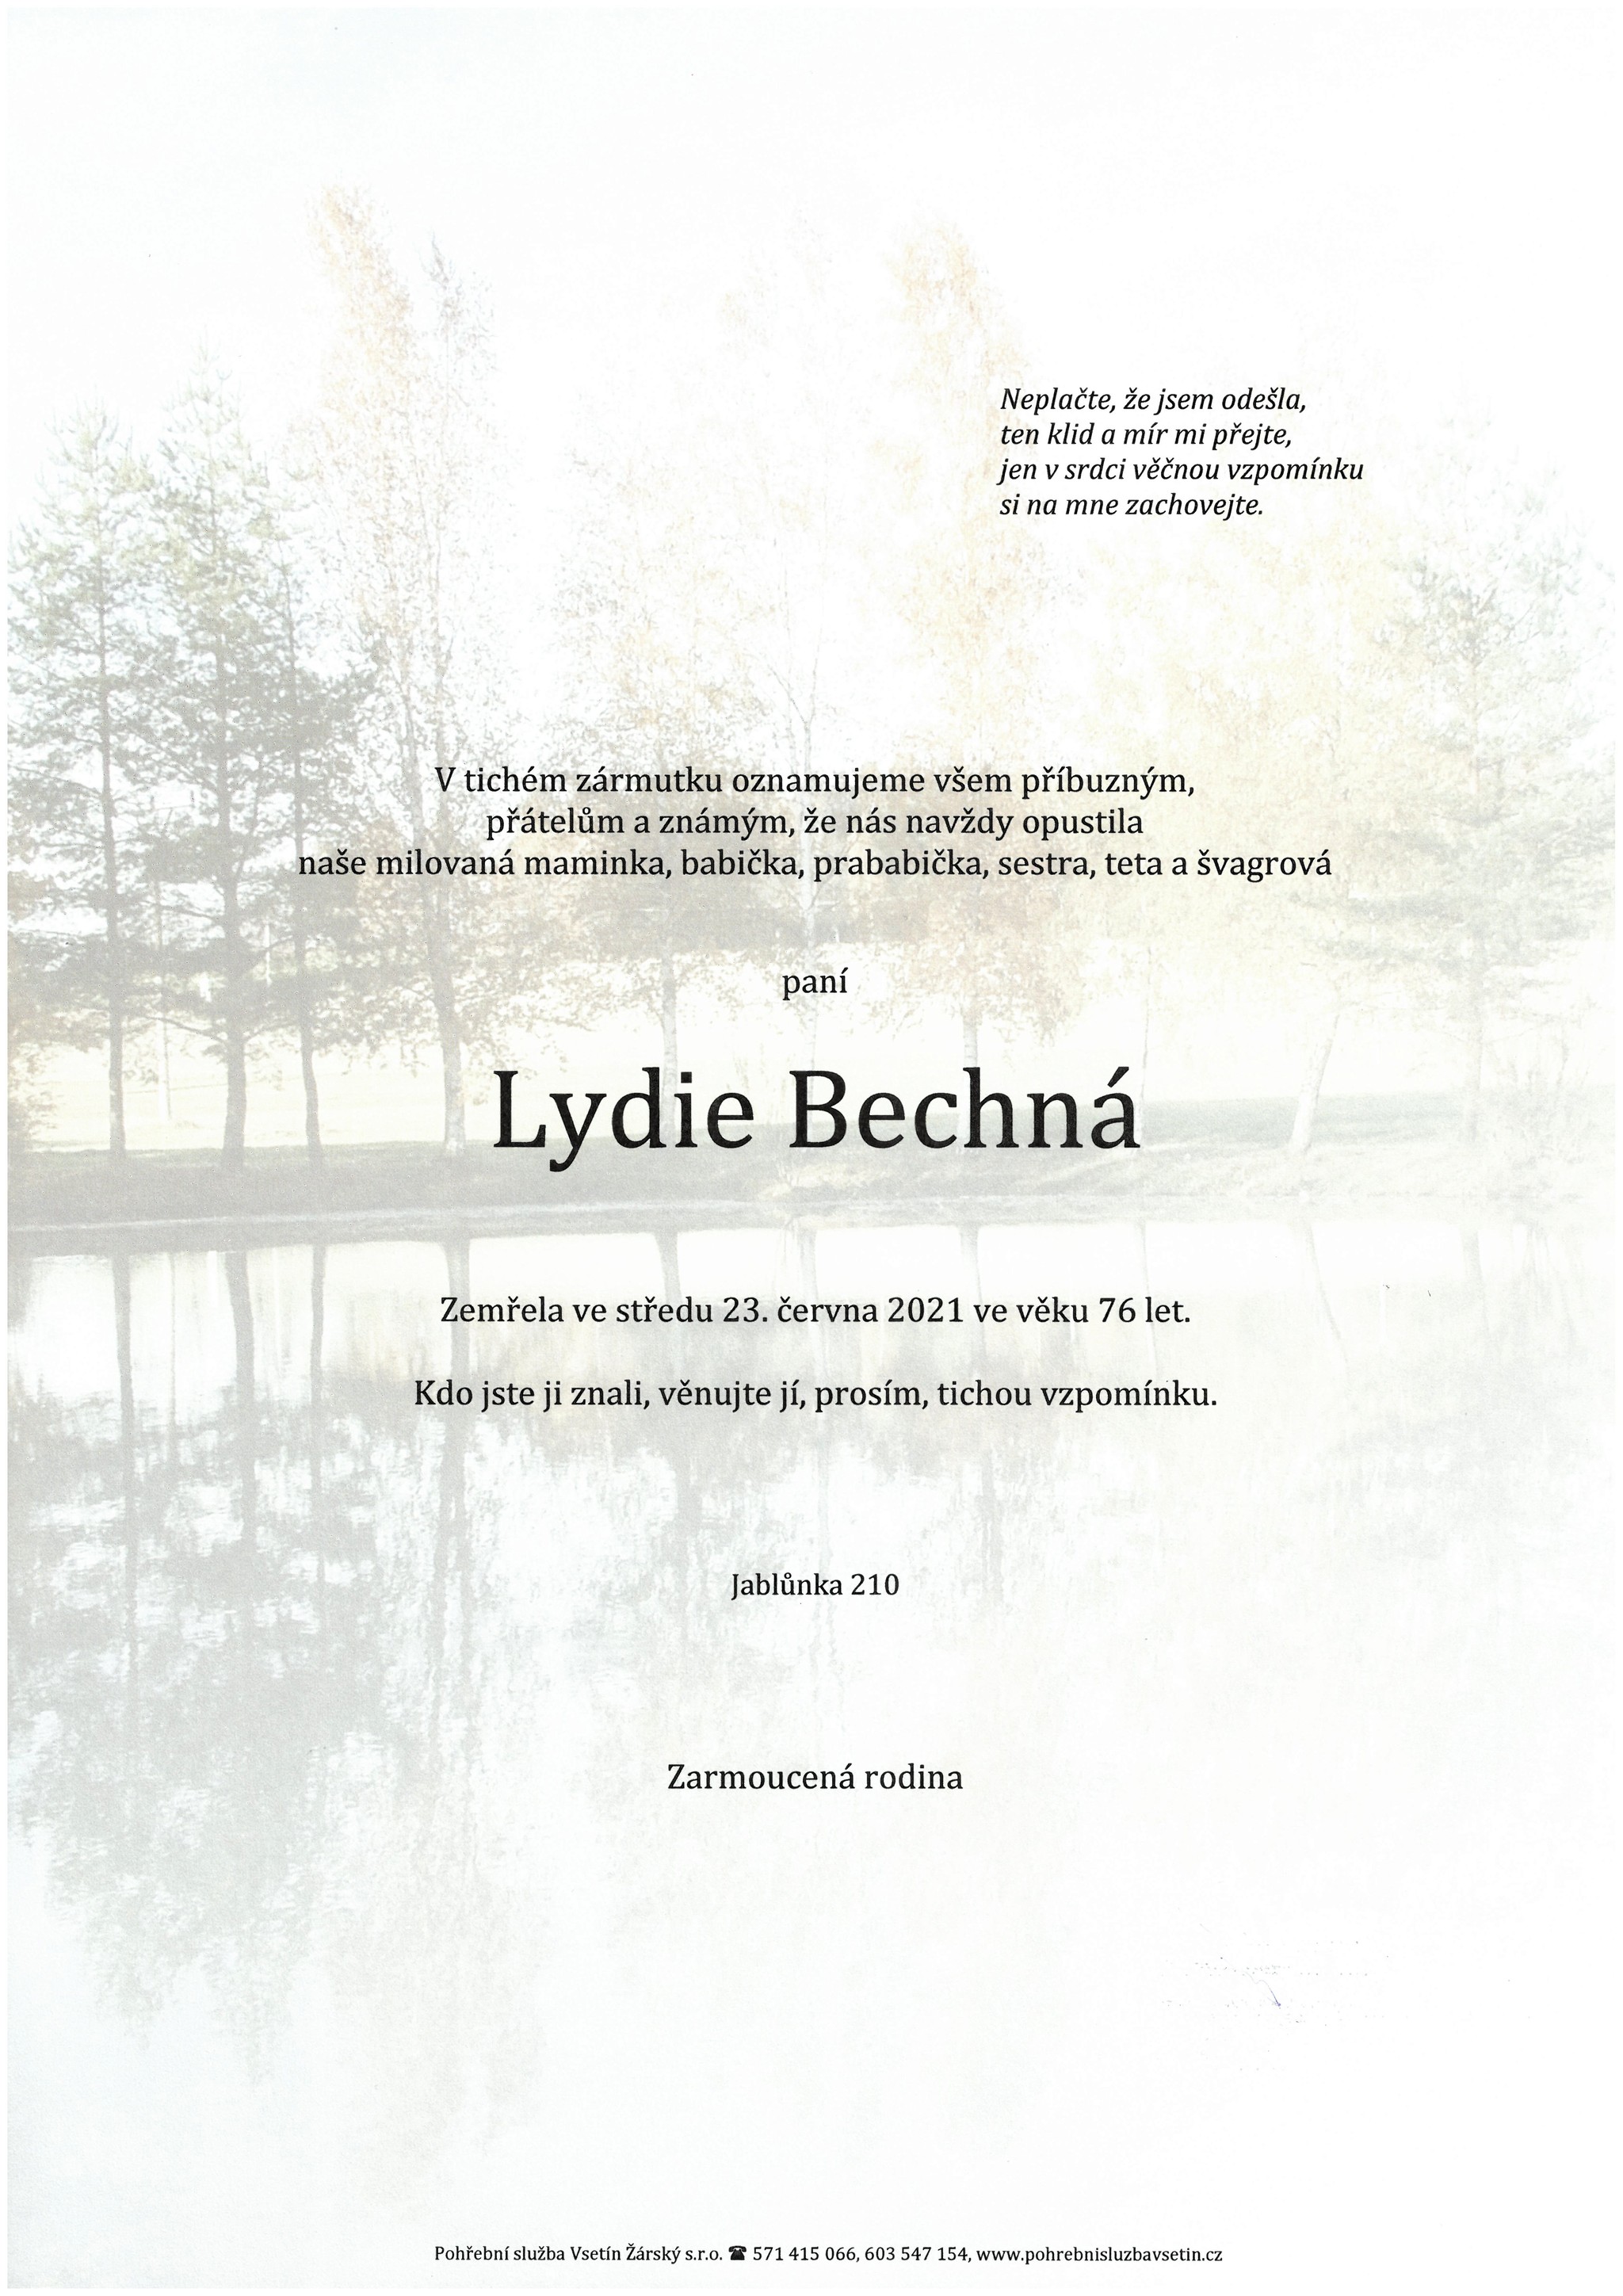 Lydie Bechná